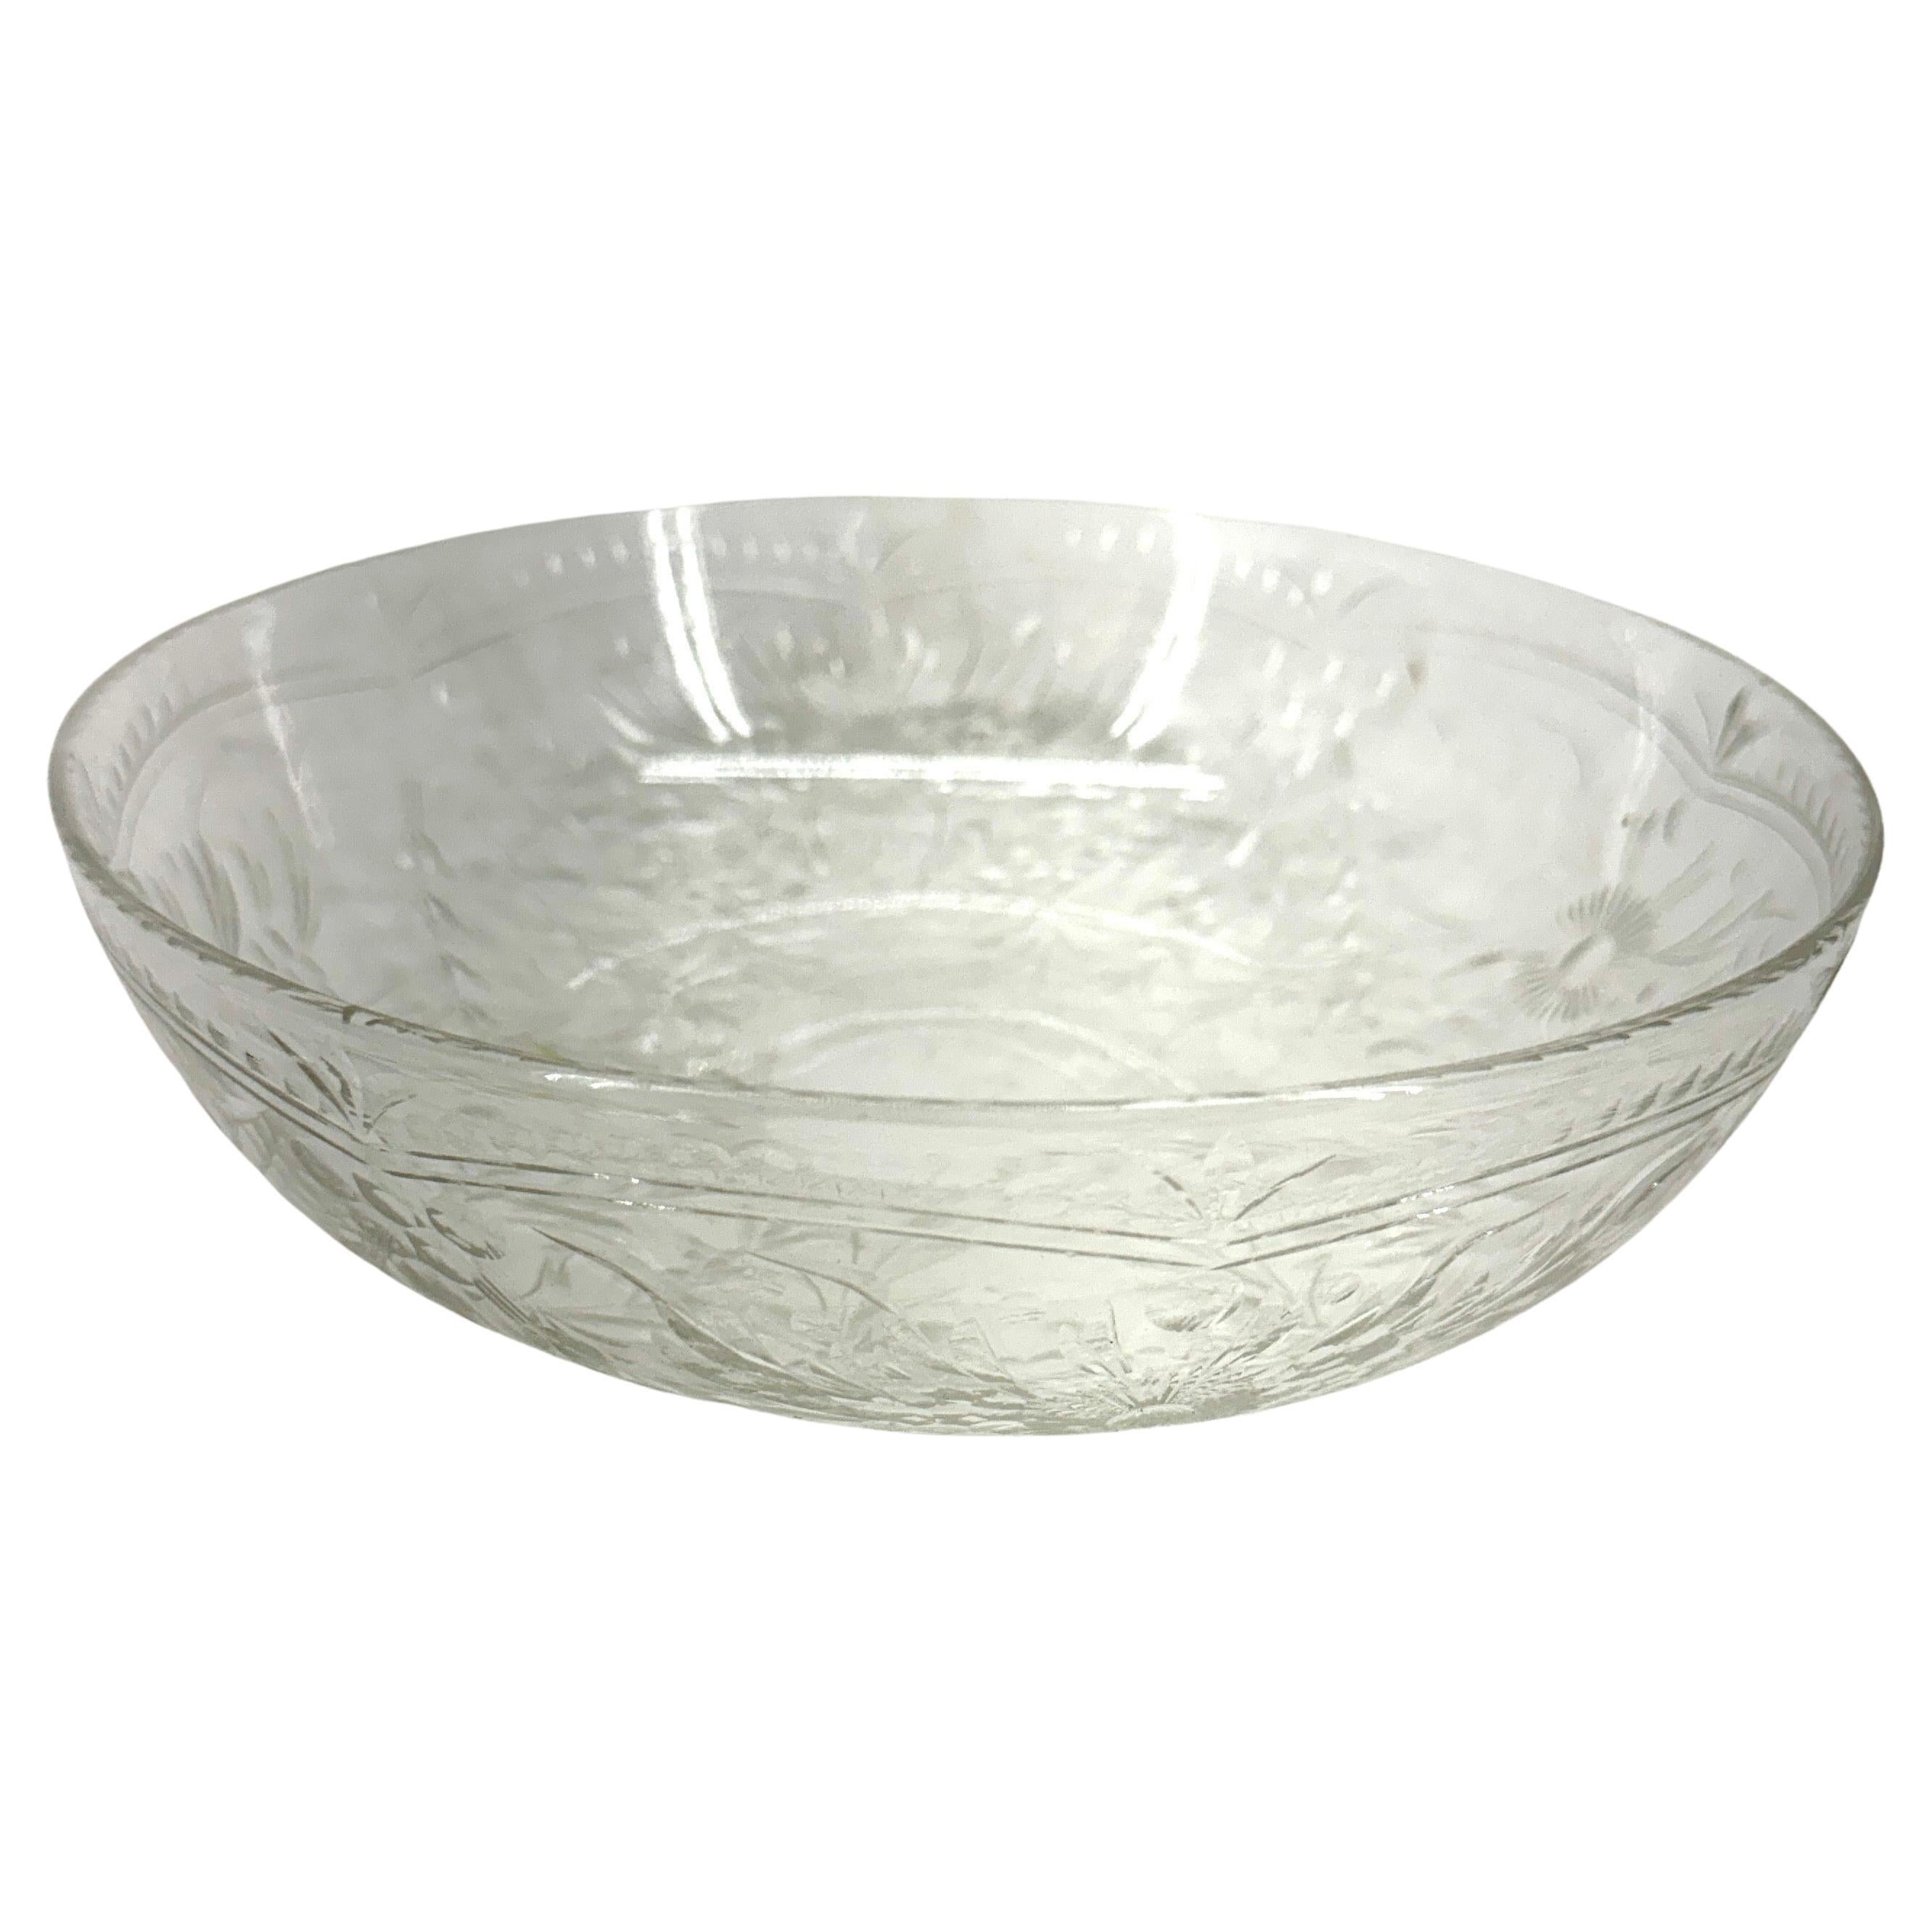 Large European Low Cut Crystal Glass Centerpiece Bowl For Sale